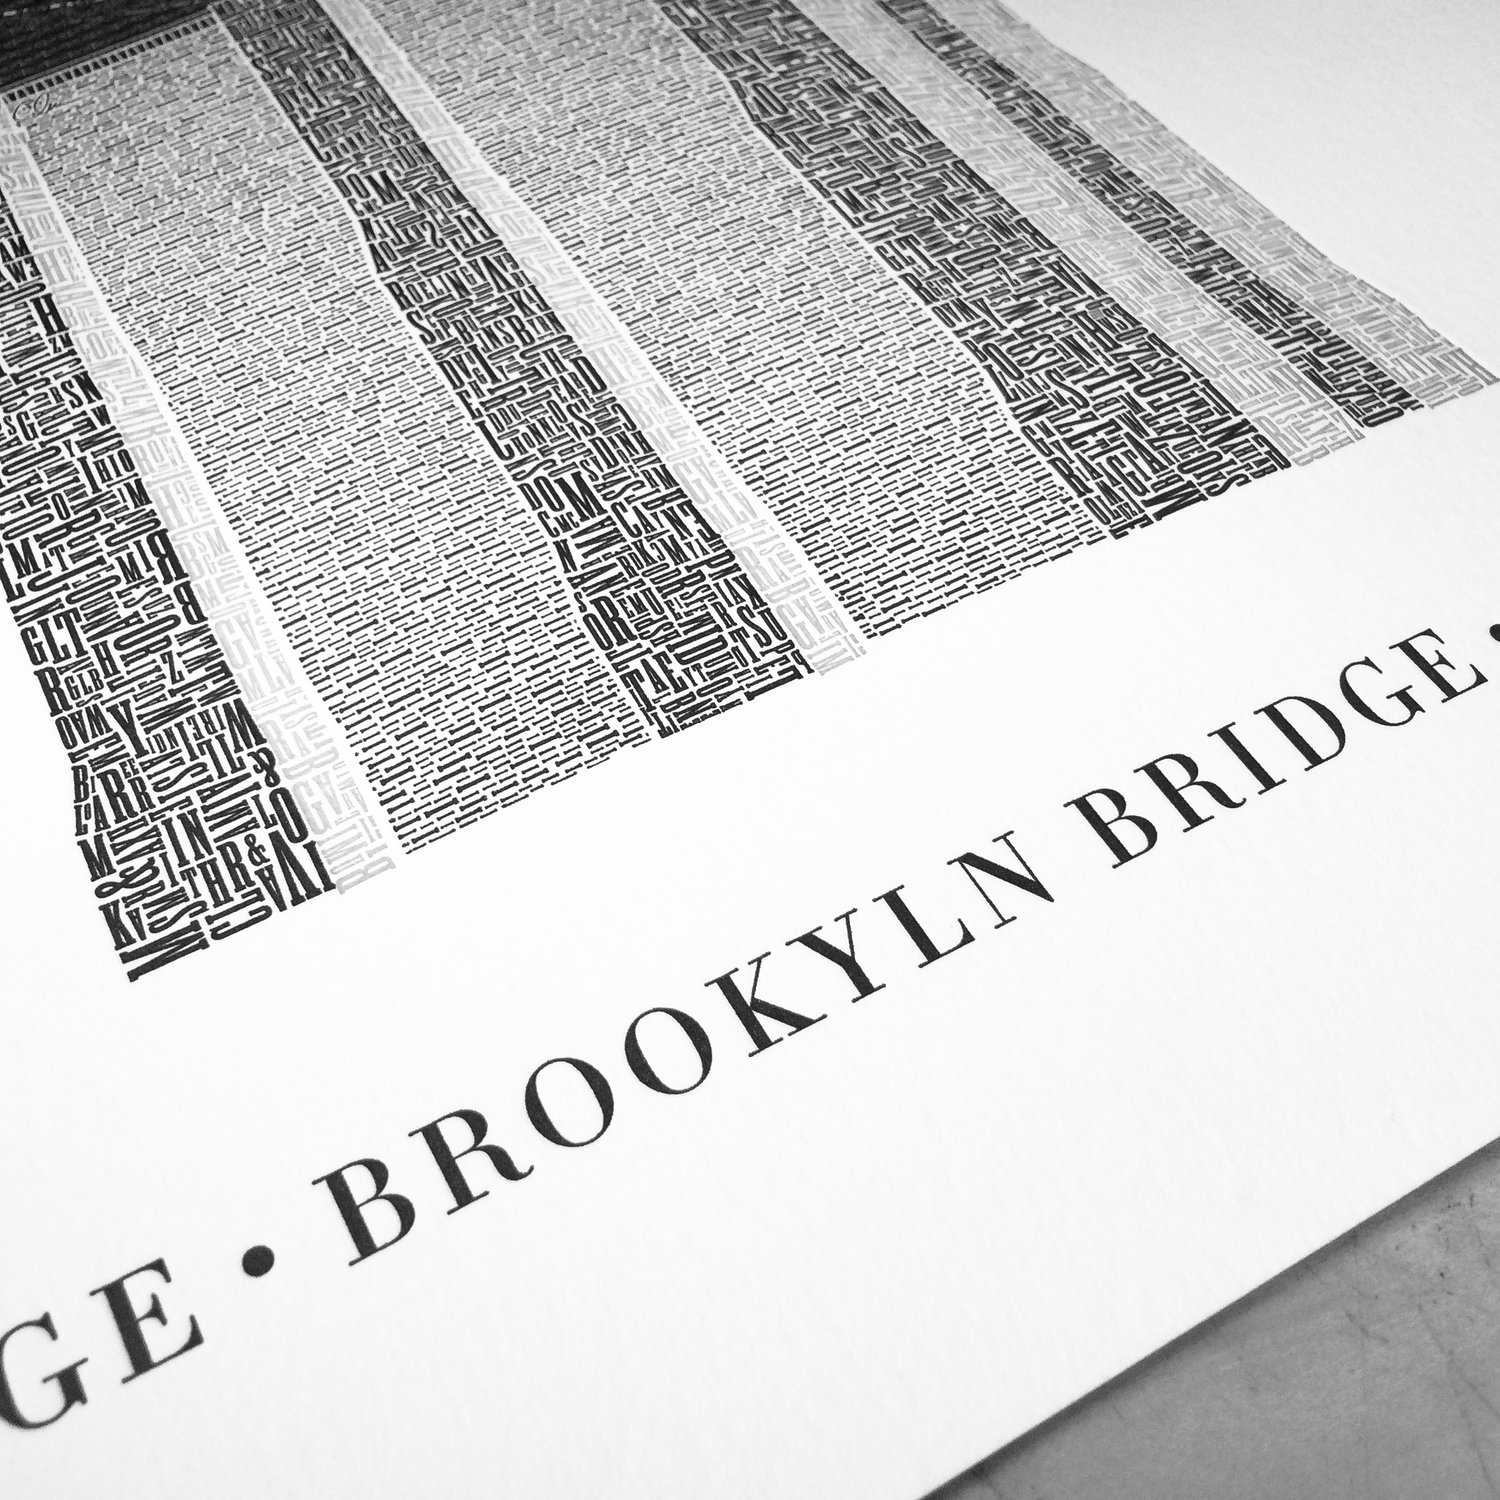 Image of Brooklyn Bridge – Typo Edition